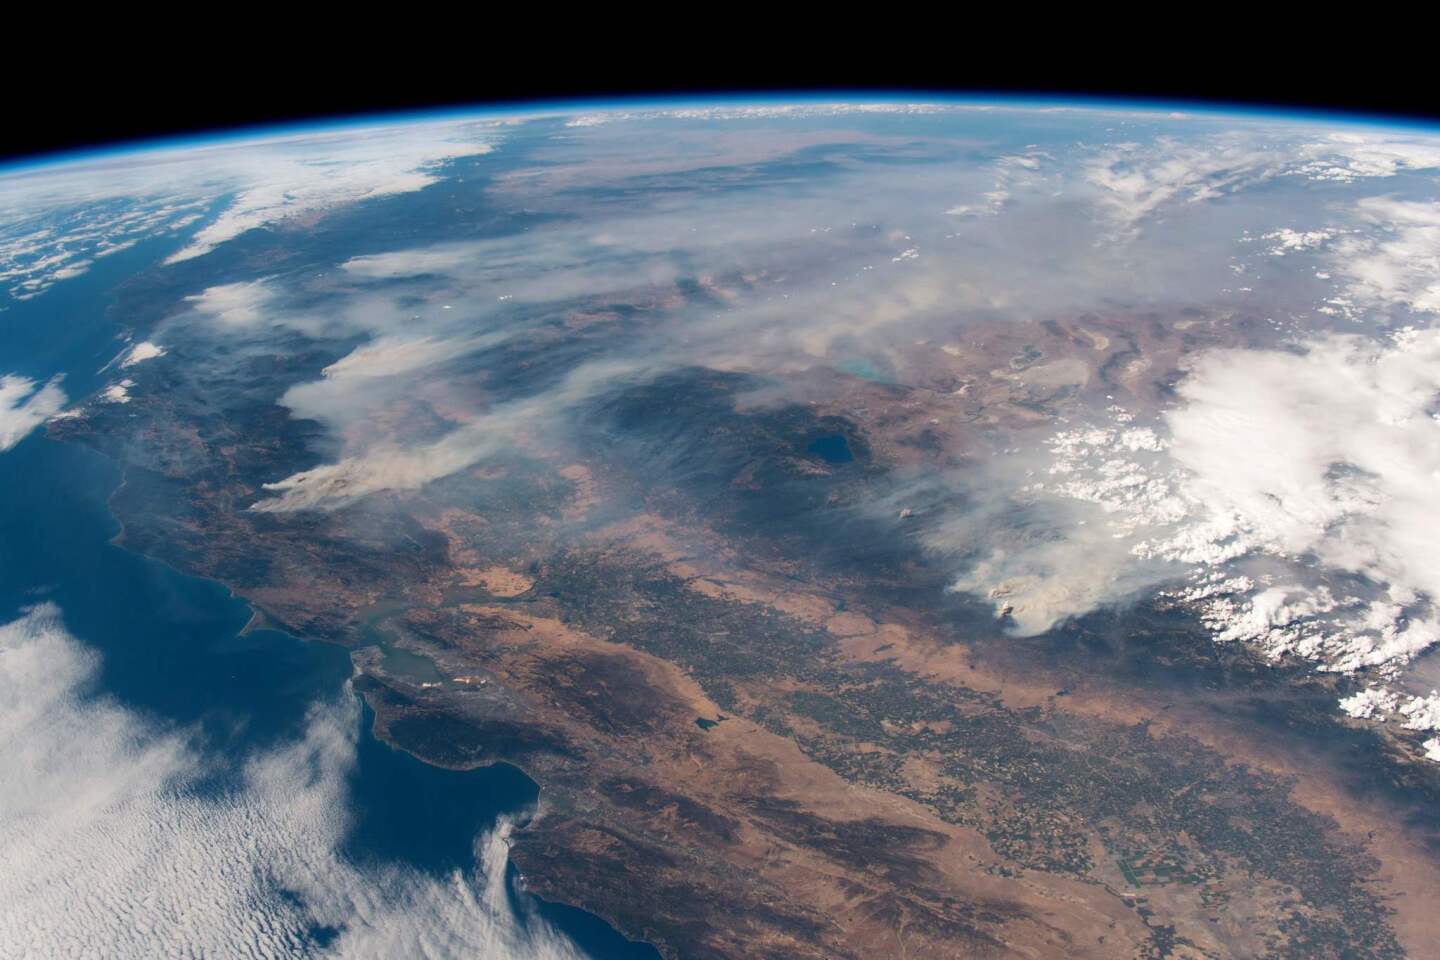 Northern Calif. wildfires